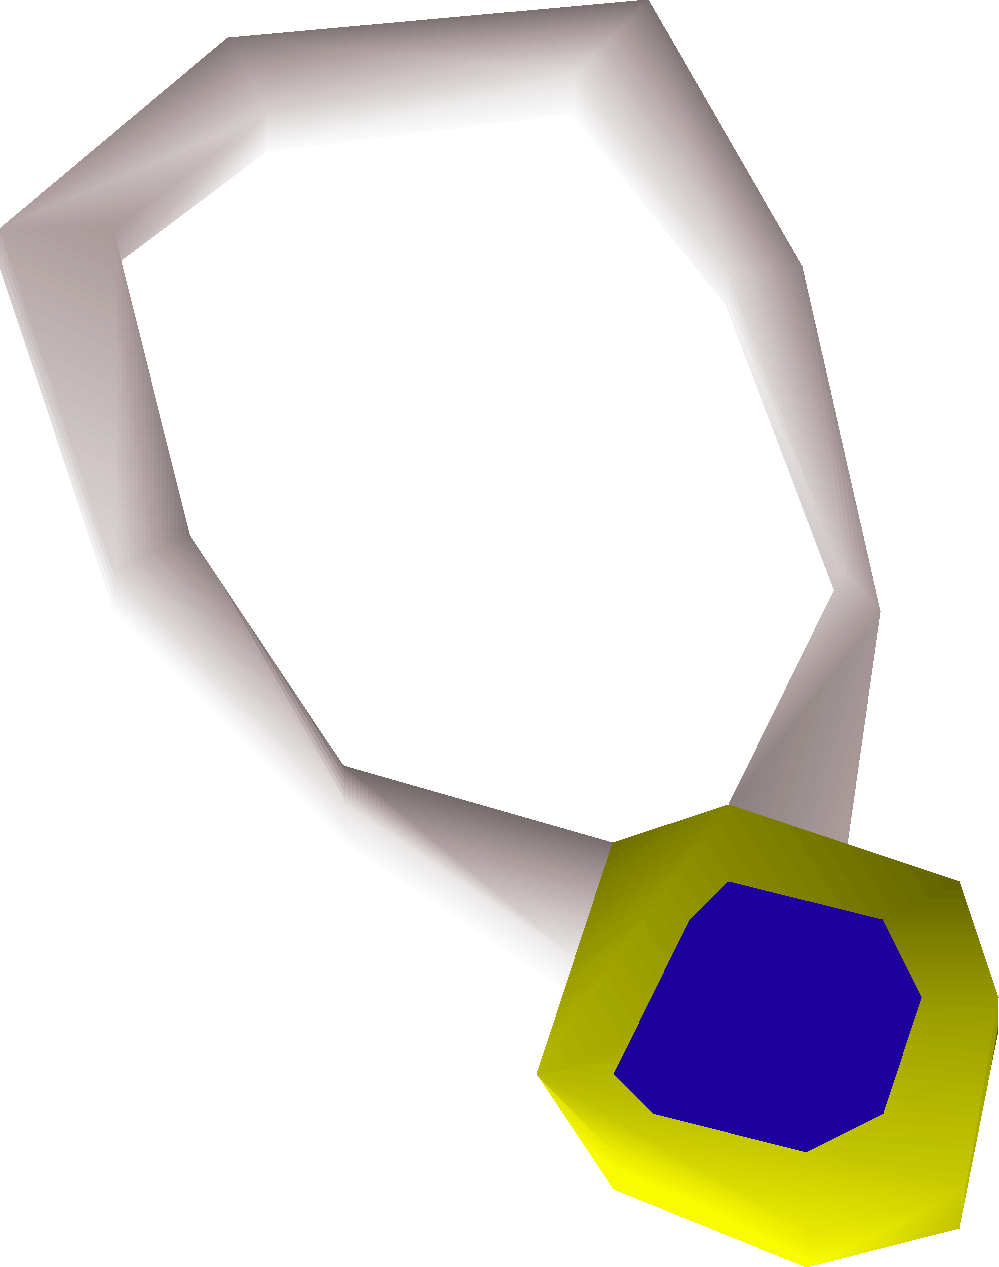 Gold necklace - OSRS Wiki